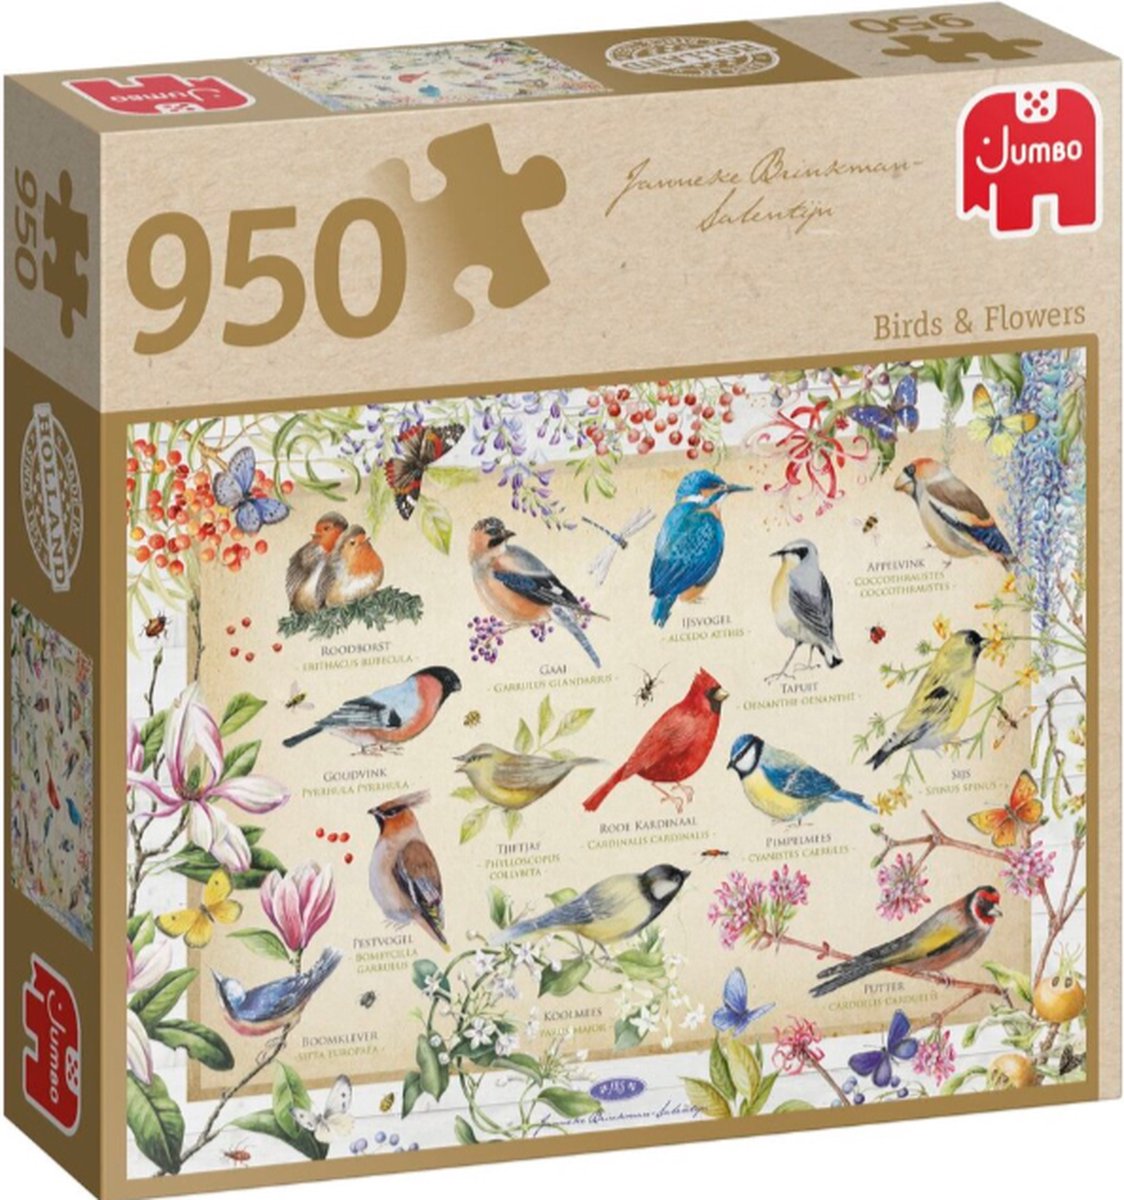 Jumbo Premium Collection Puzzel Janneke Brinkman: Birds & Flowers - Legpuzzel - 950 stukjes